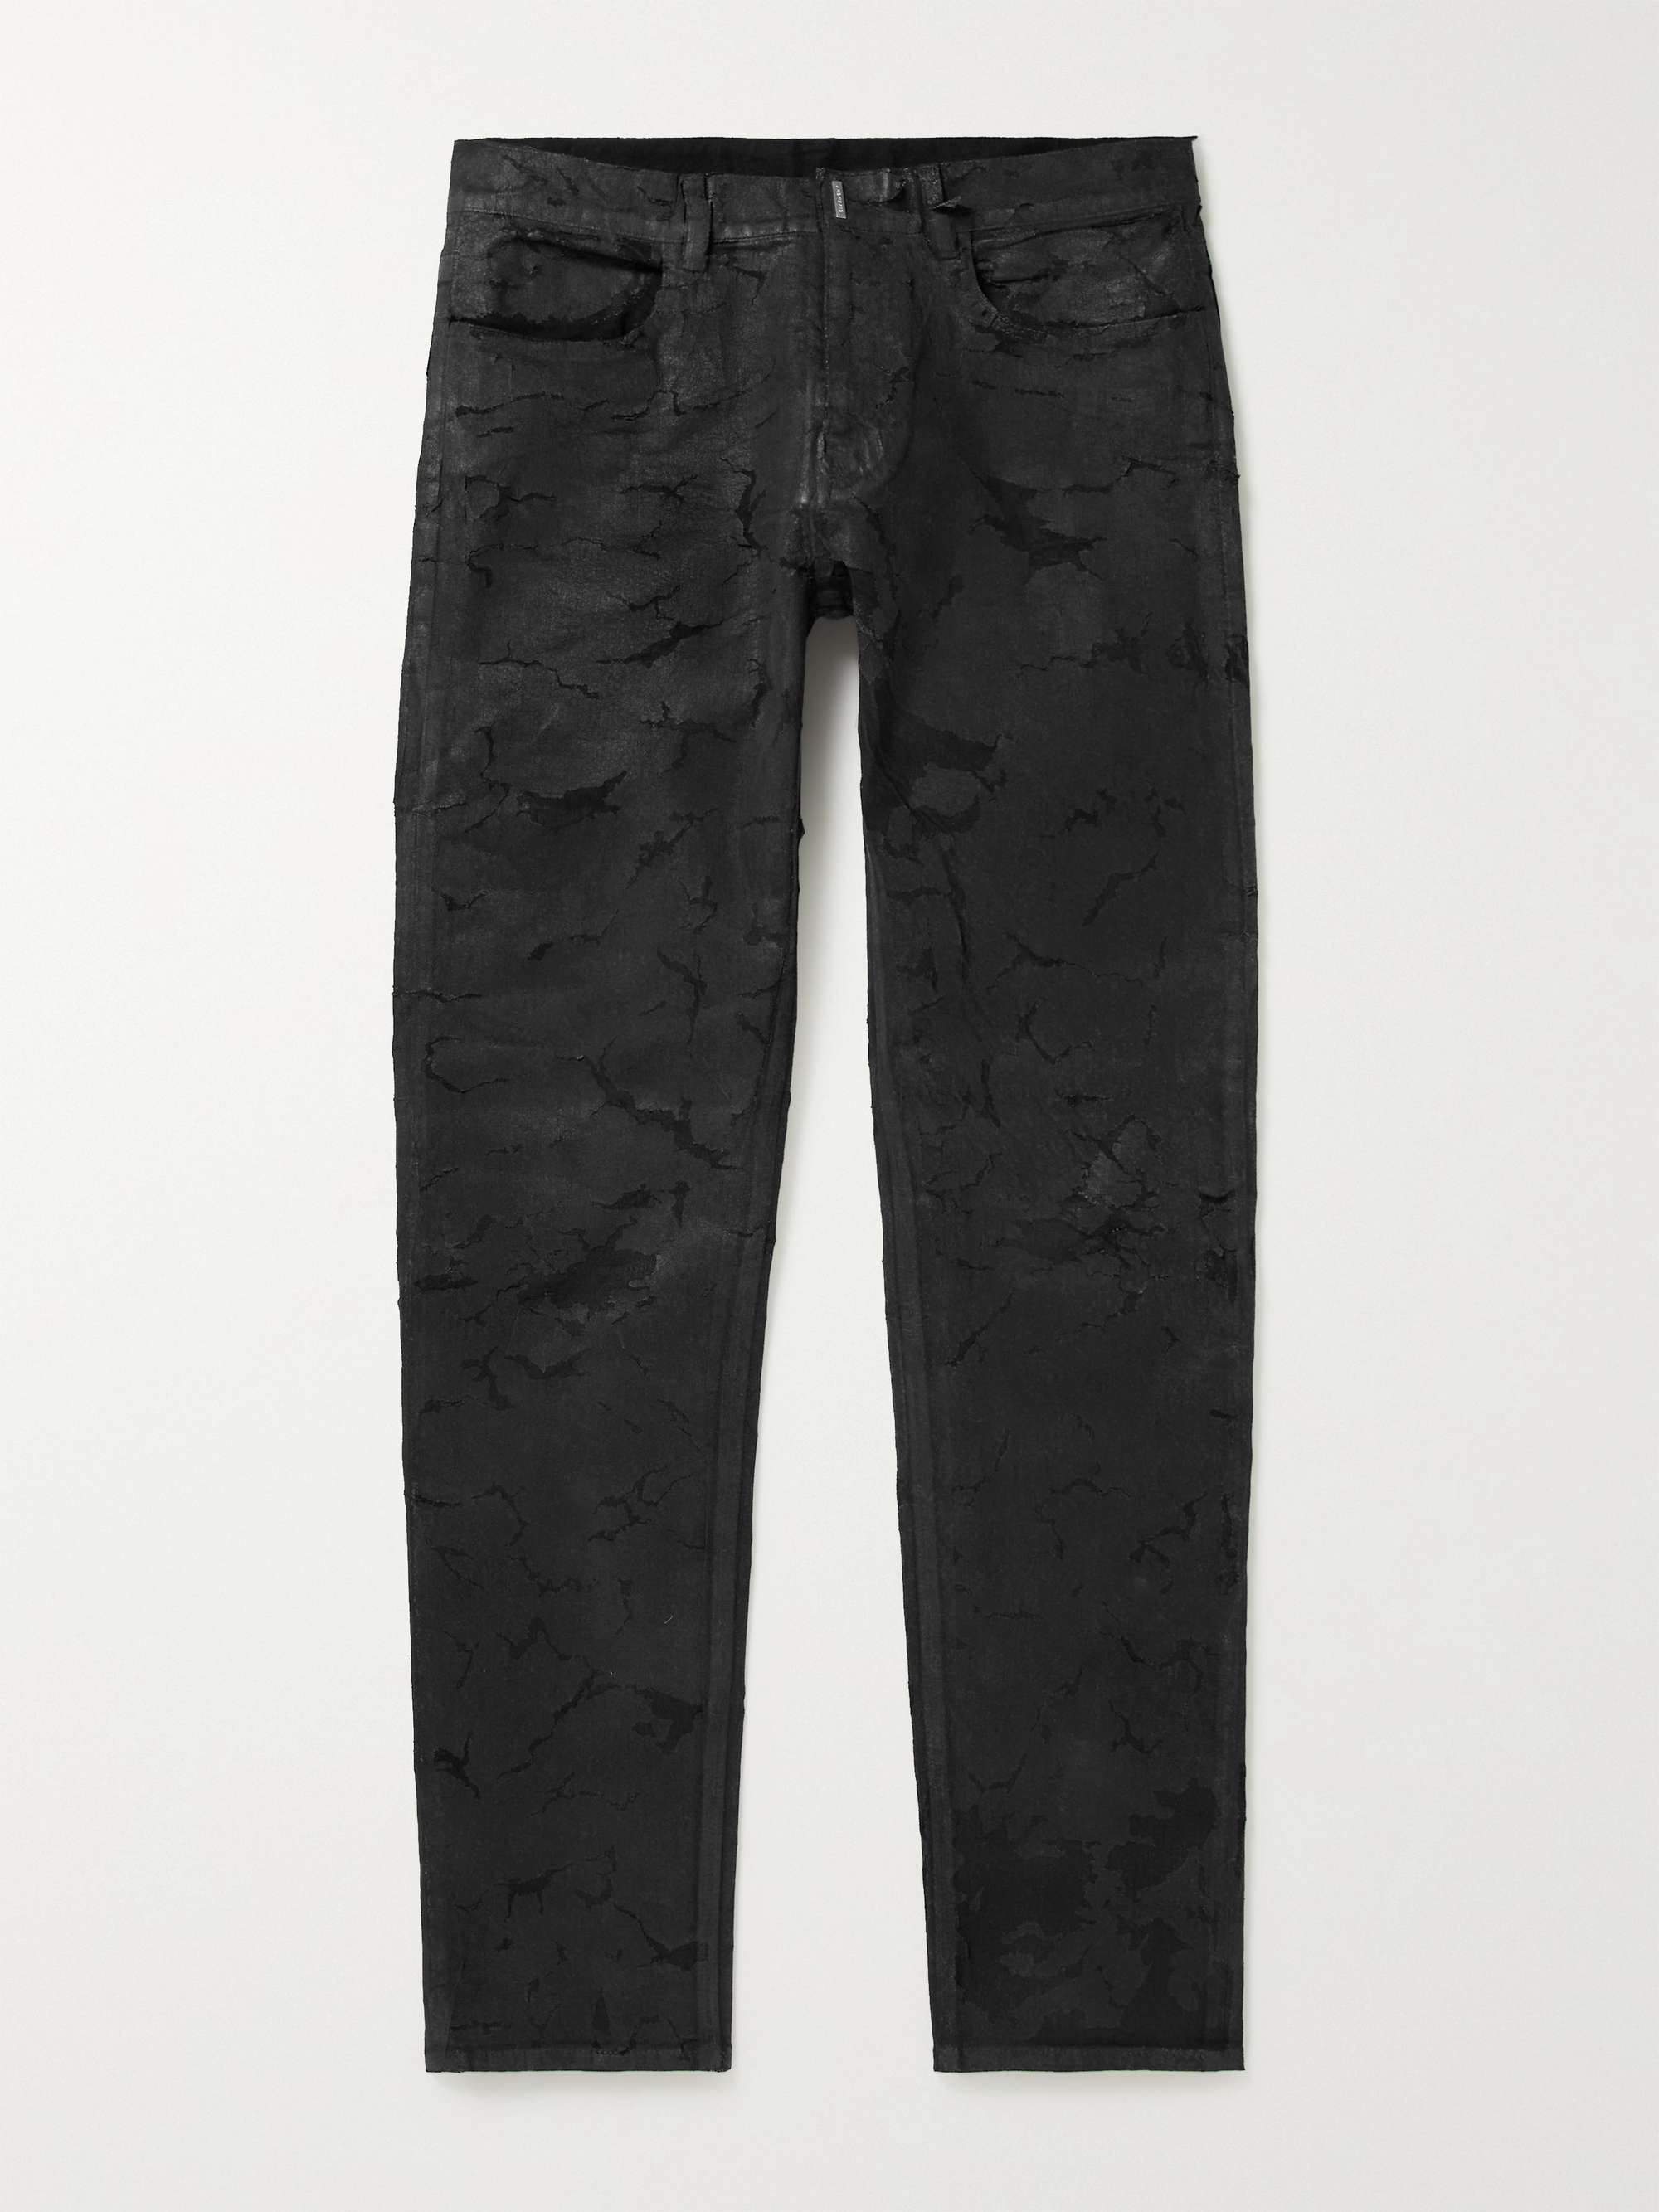 Denimicity Black Coated Jeans